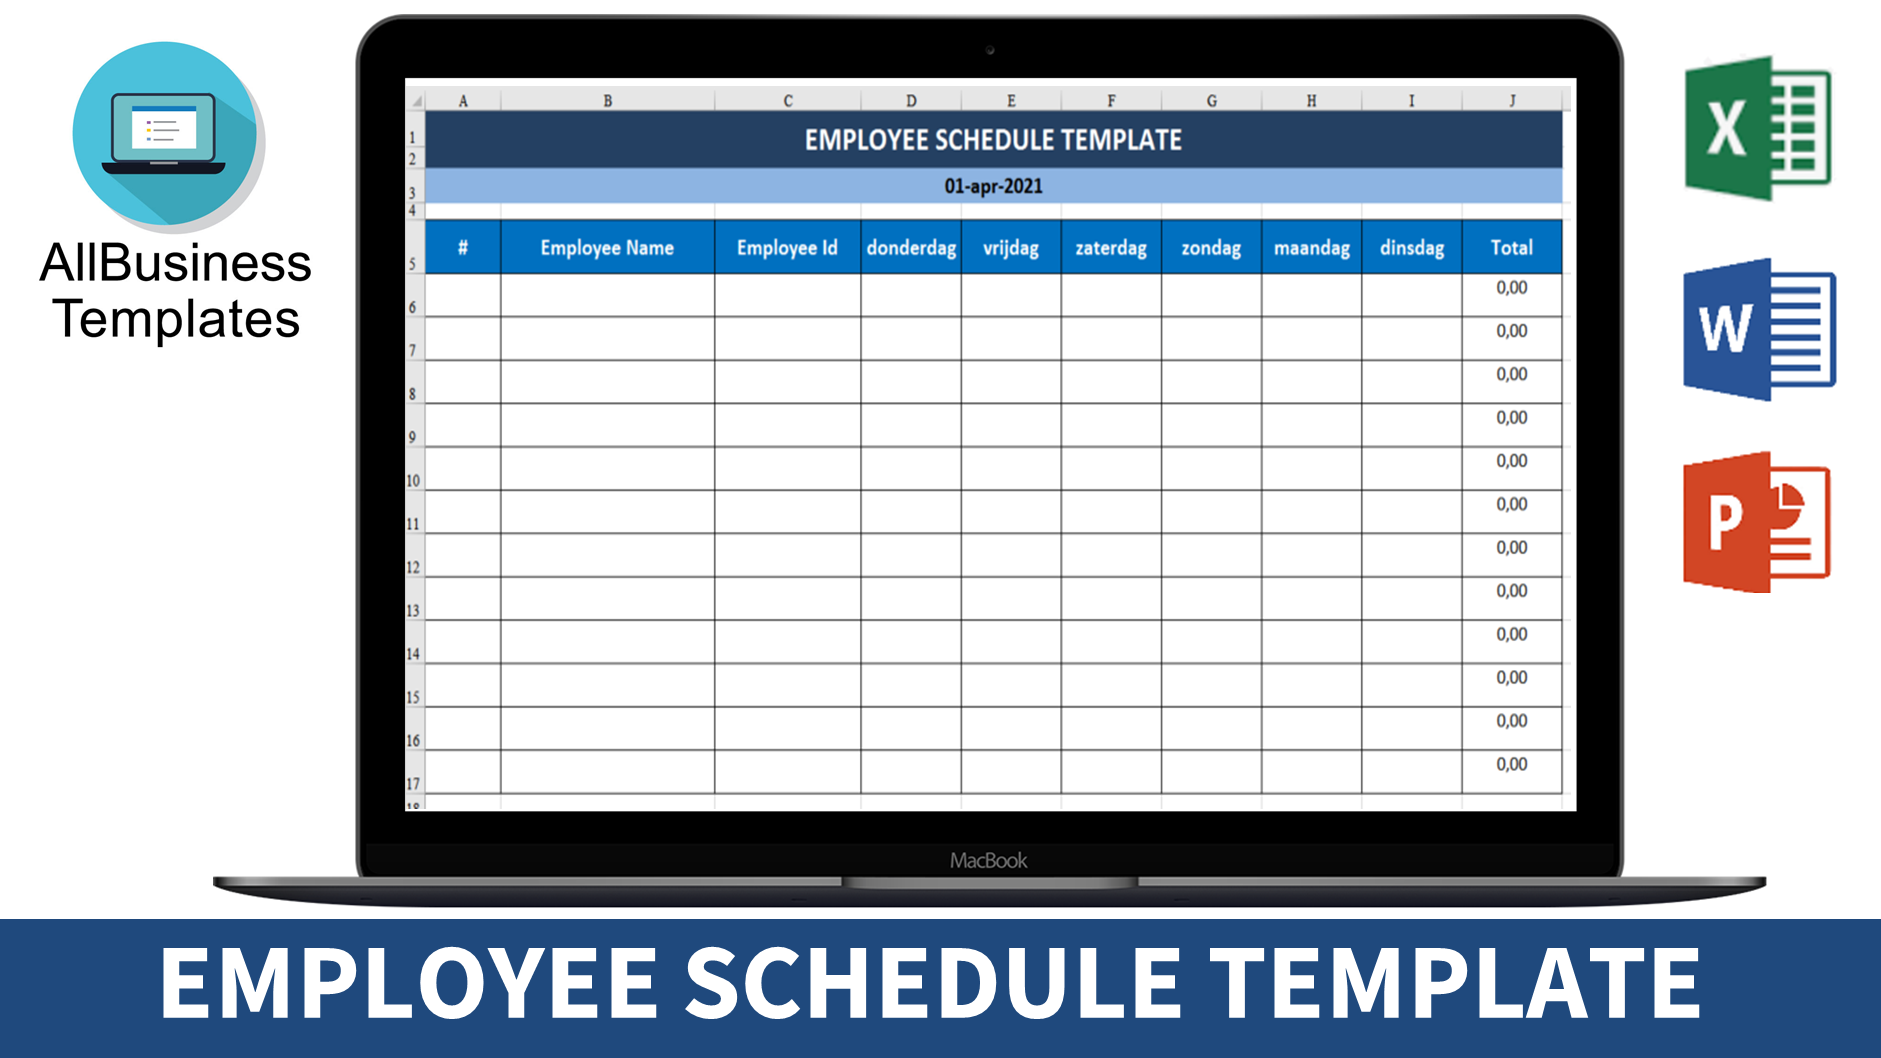 Employee schedule template main image